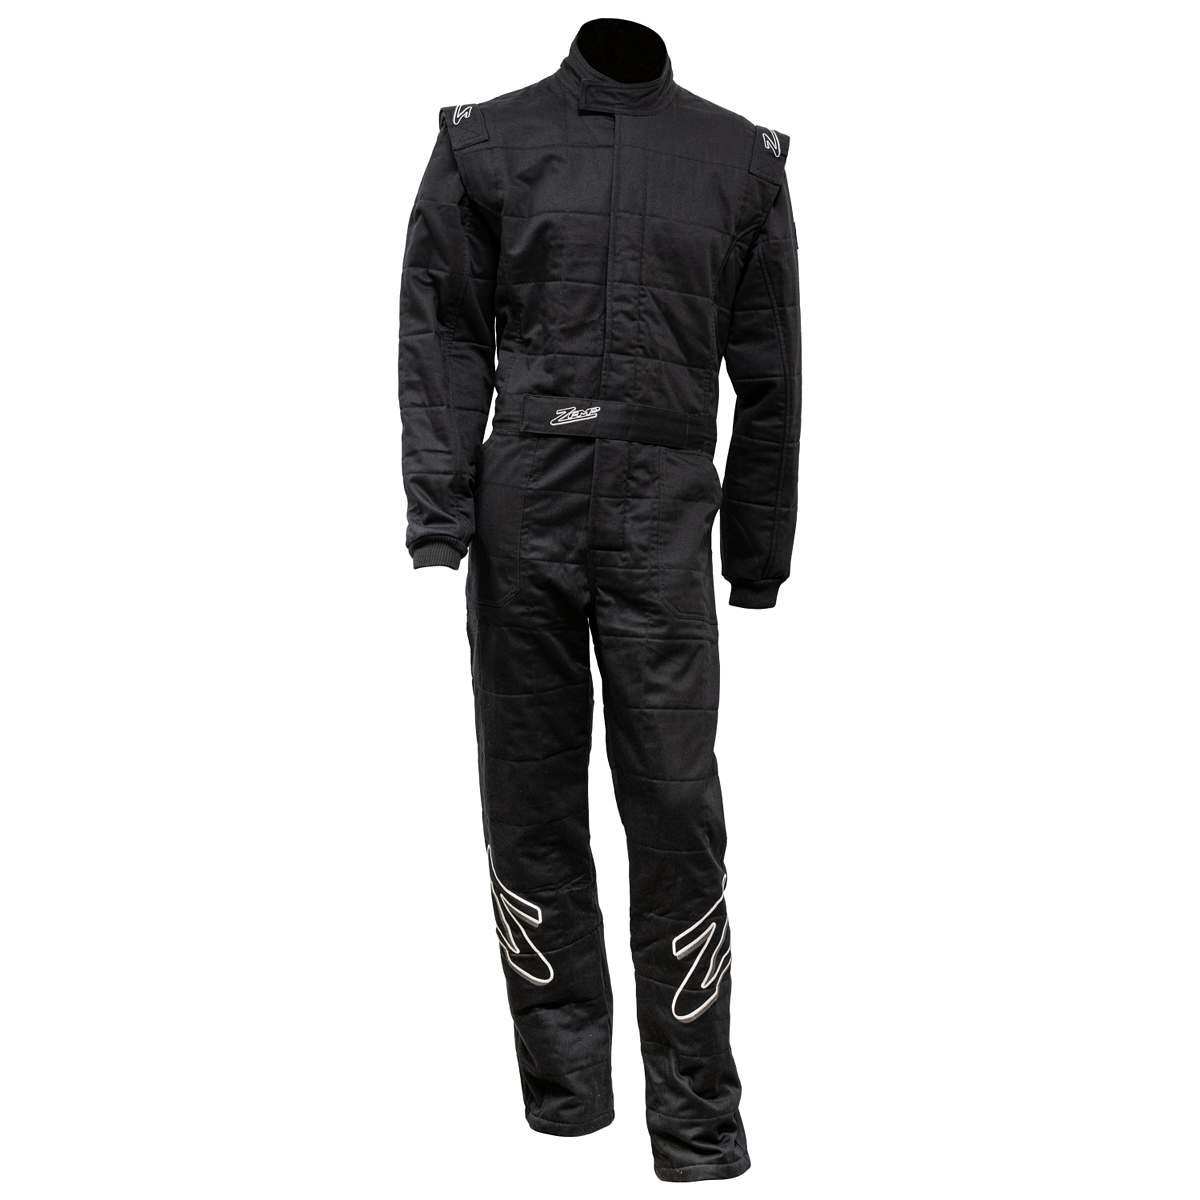 ZAMP Suit ZR-30 X-Large Black SFI3.2A/5